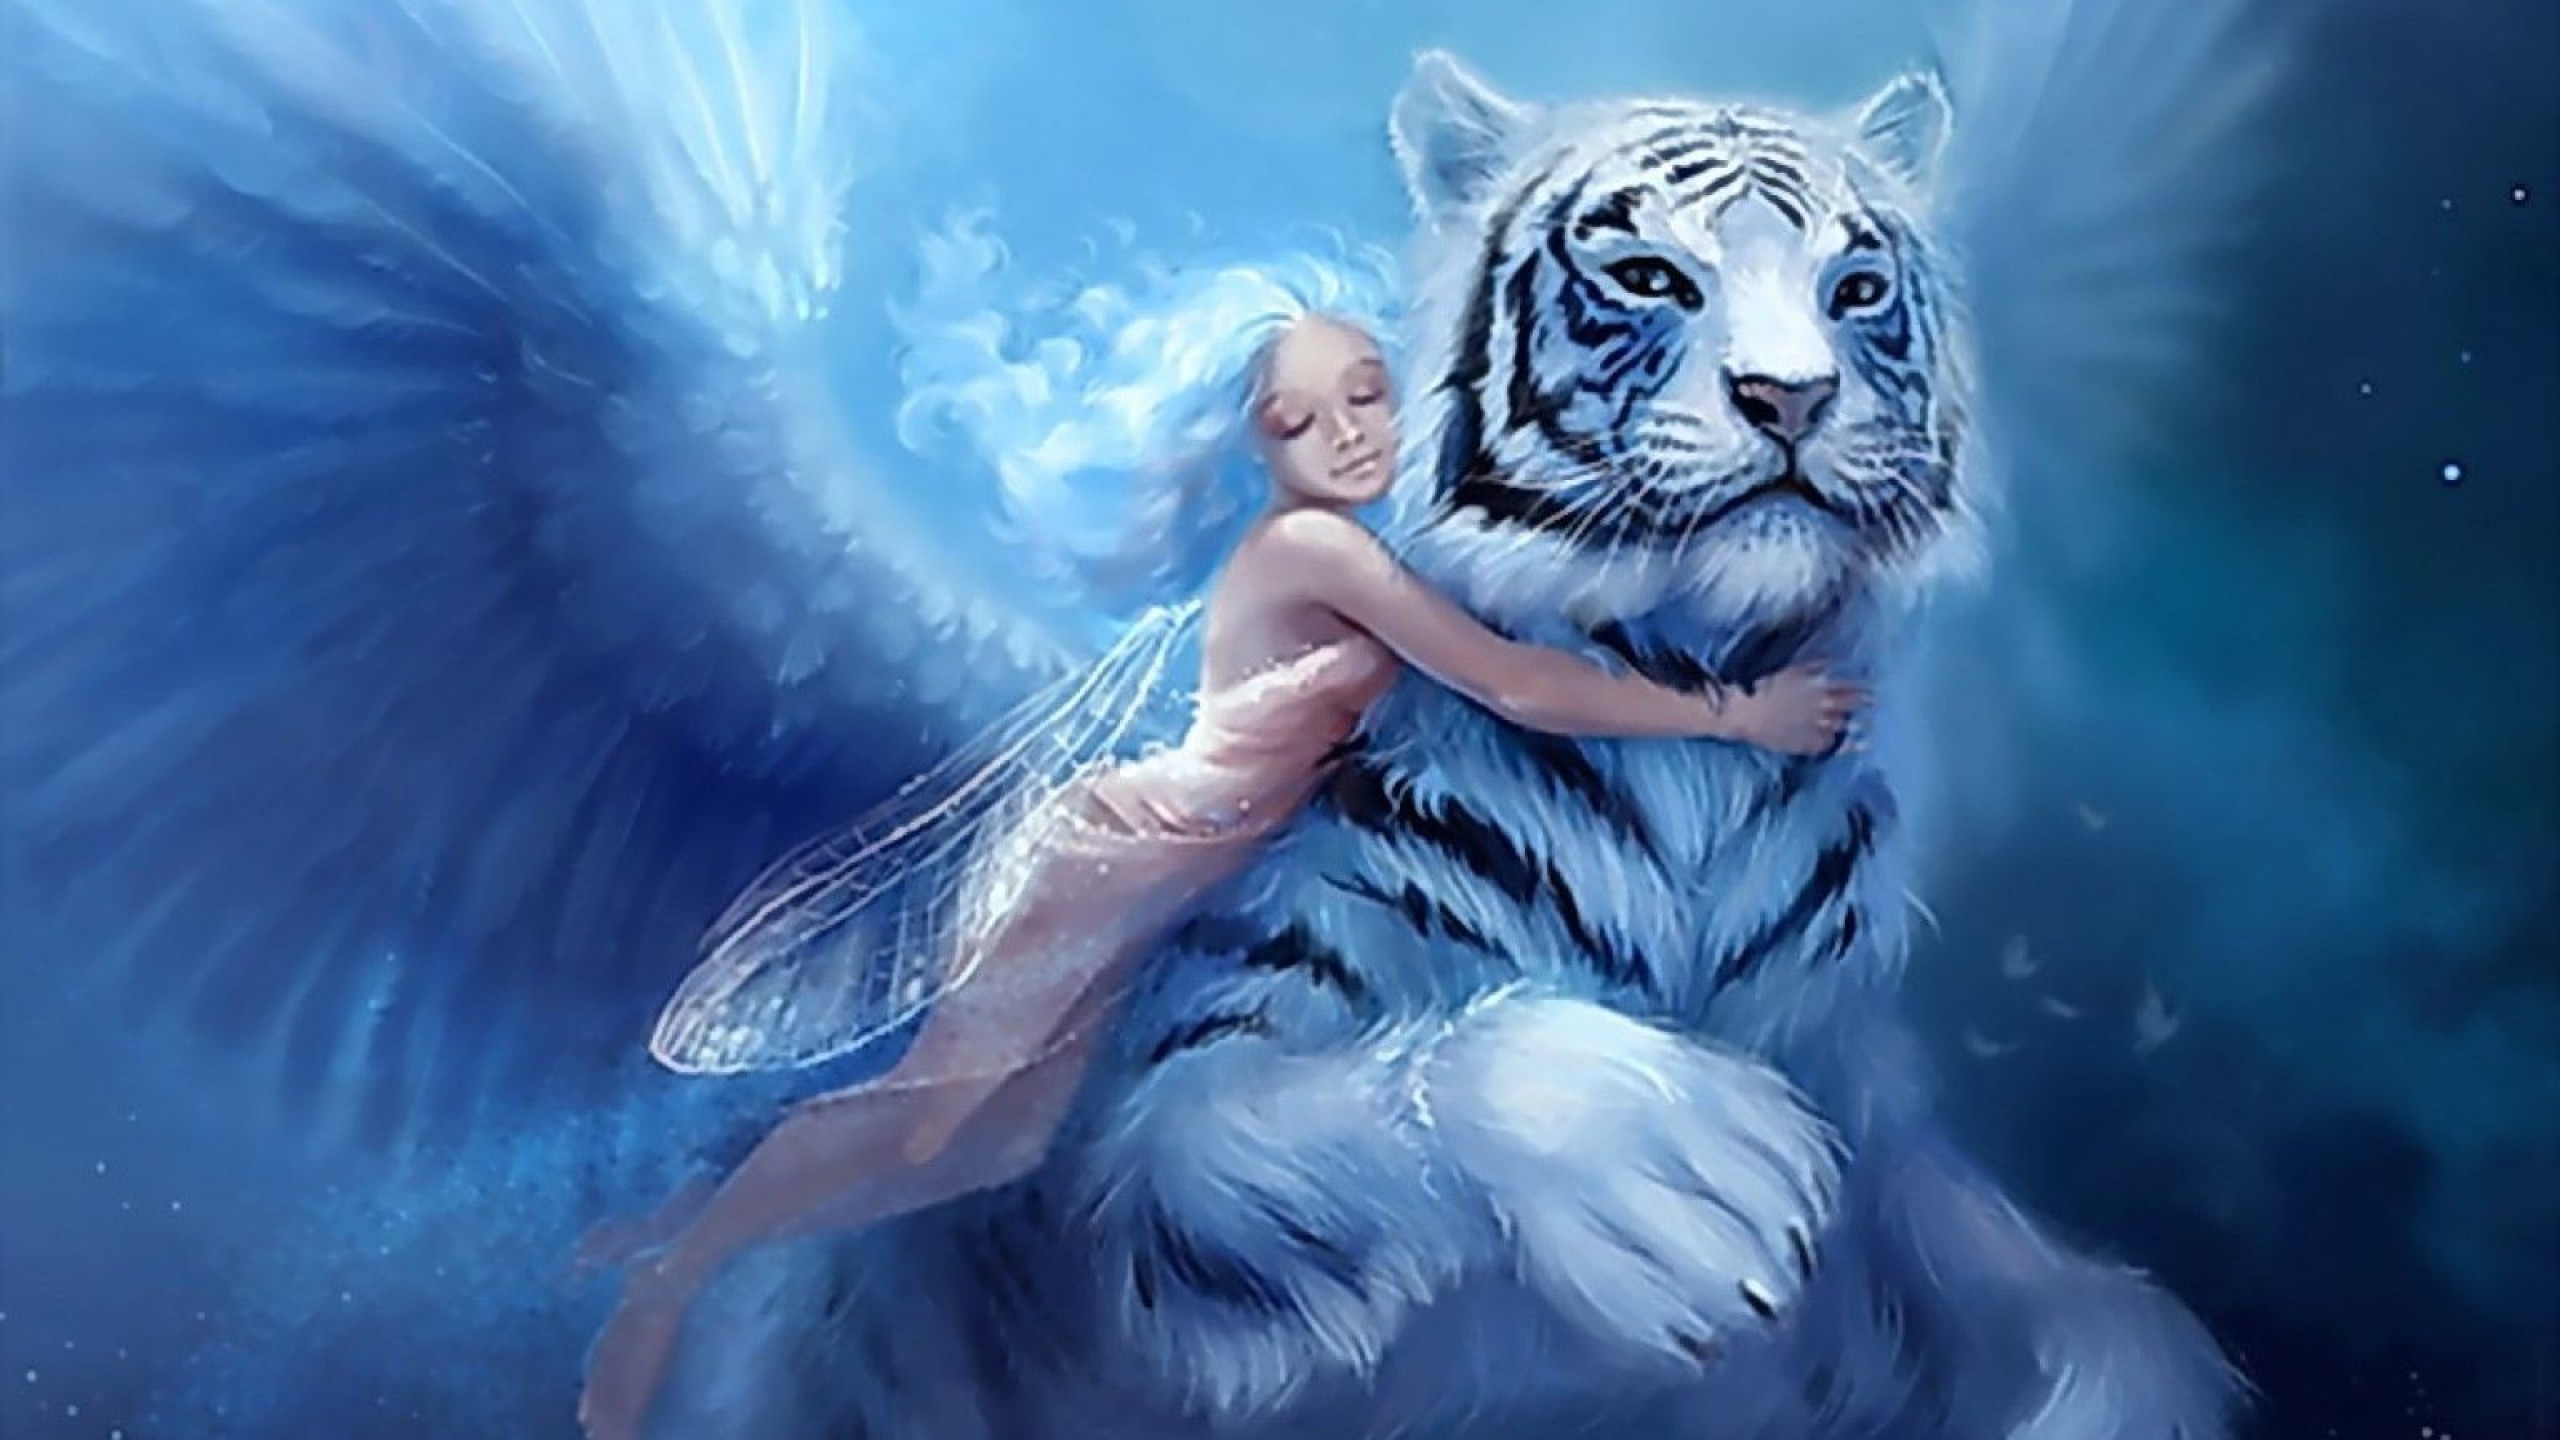 And Fairy HD Wallpaper Fantasy White Tiger